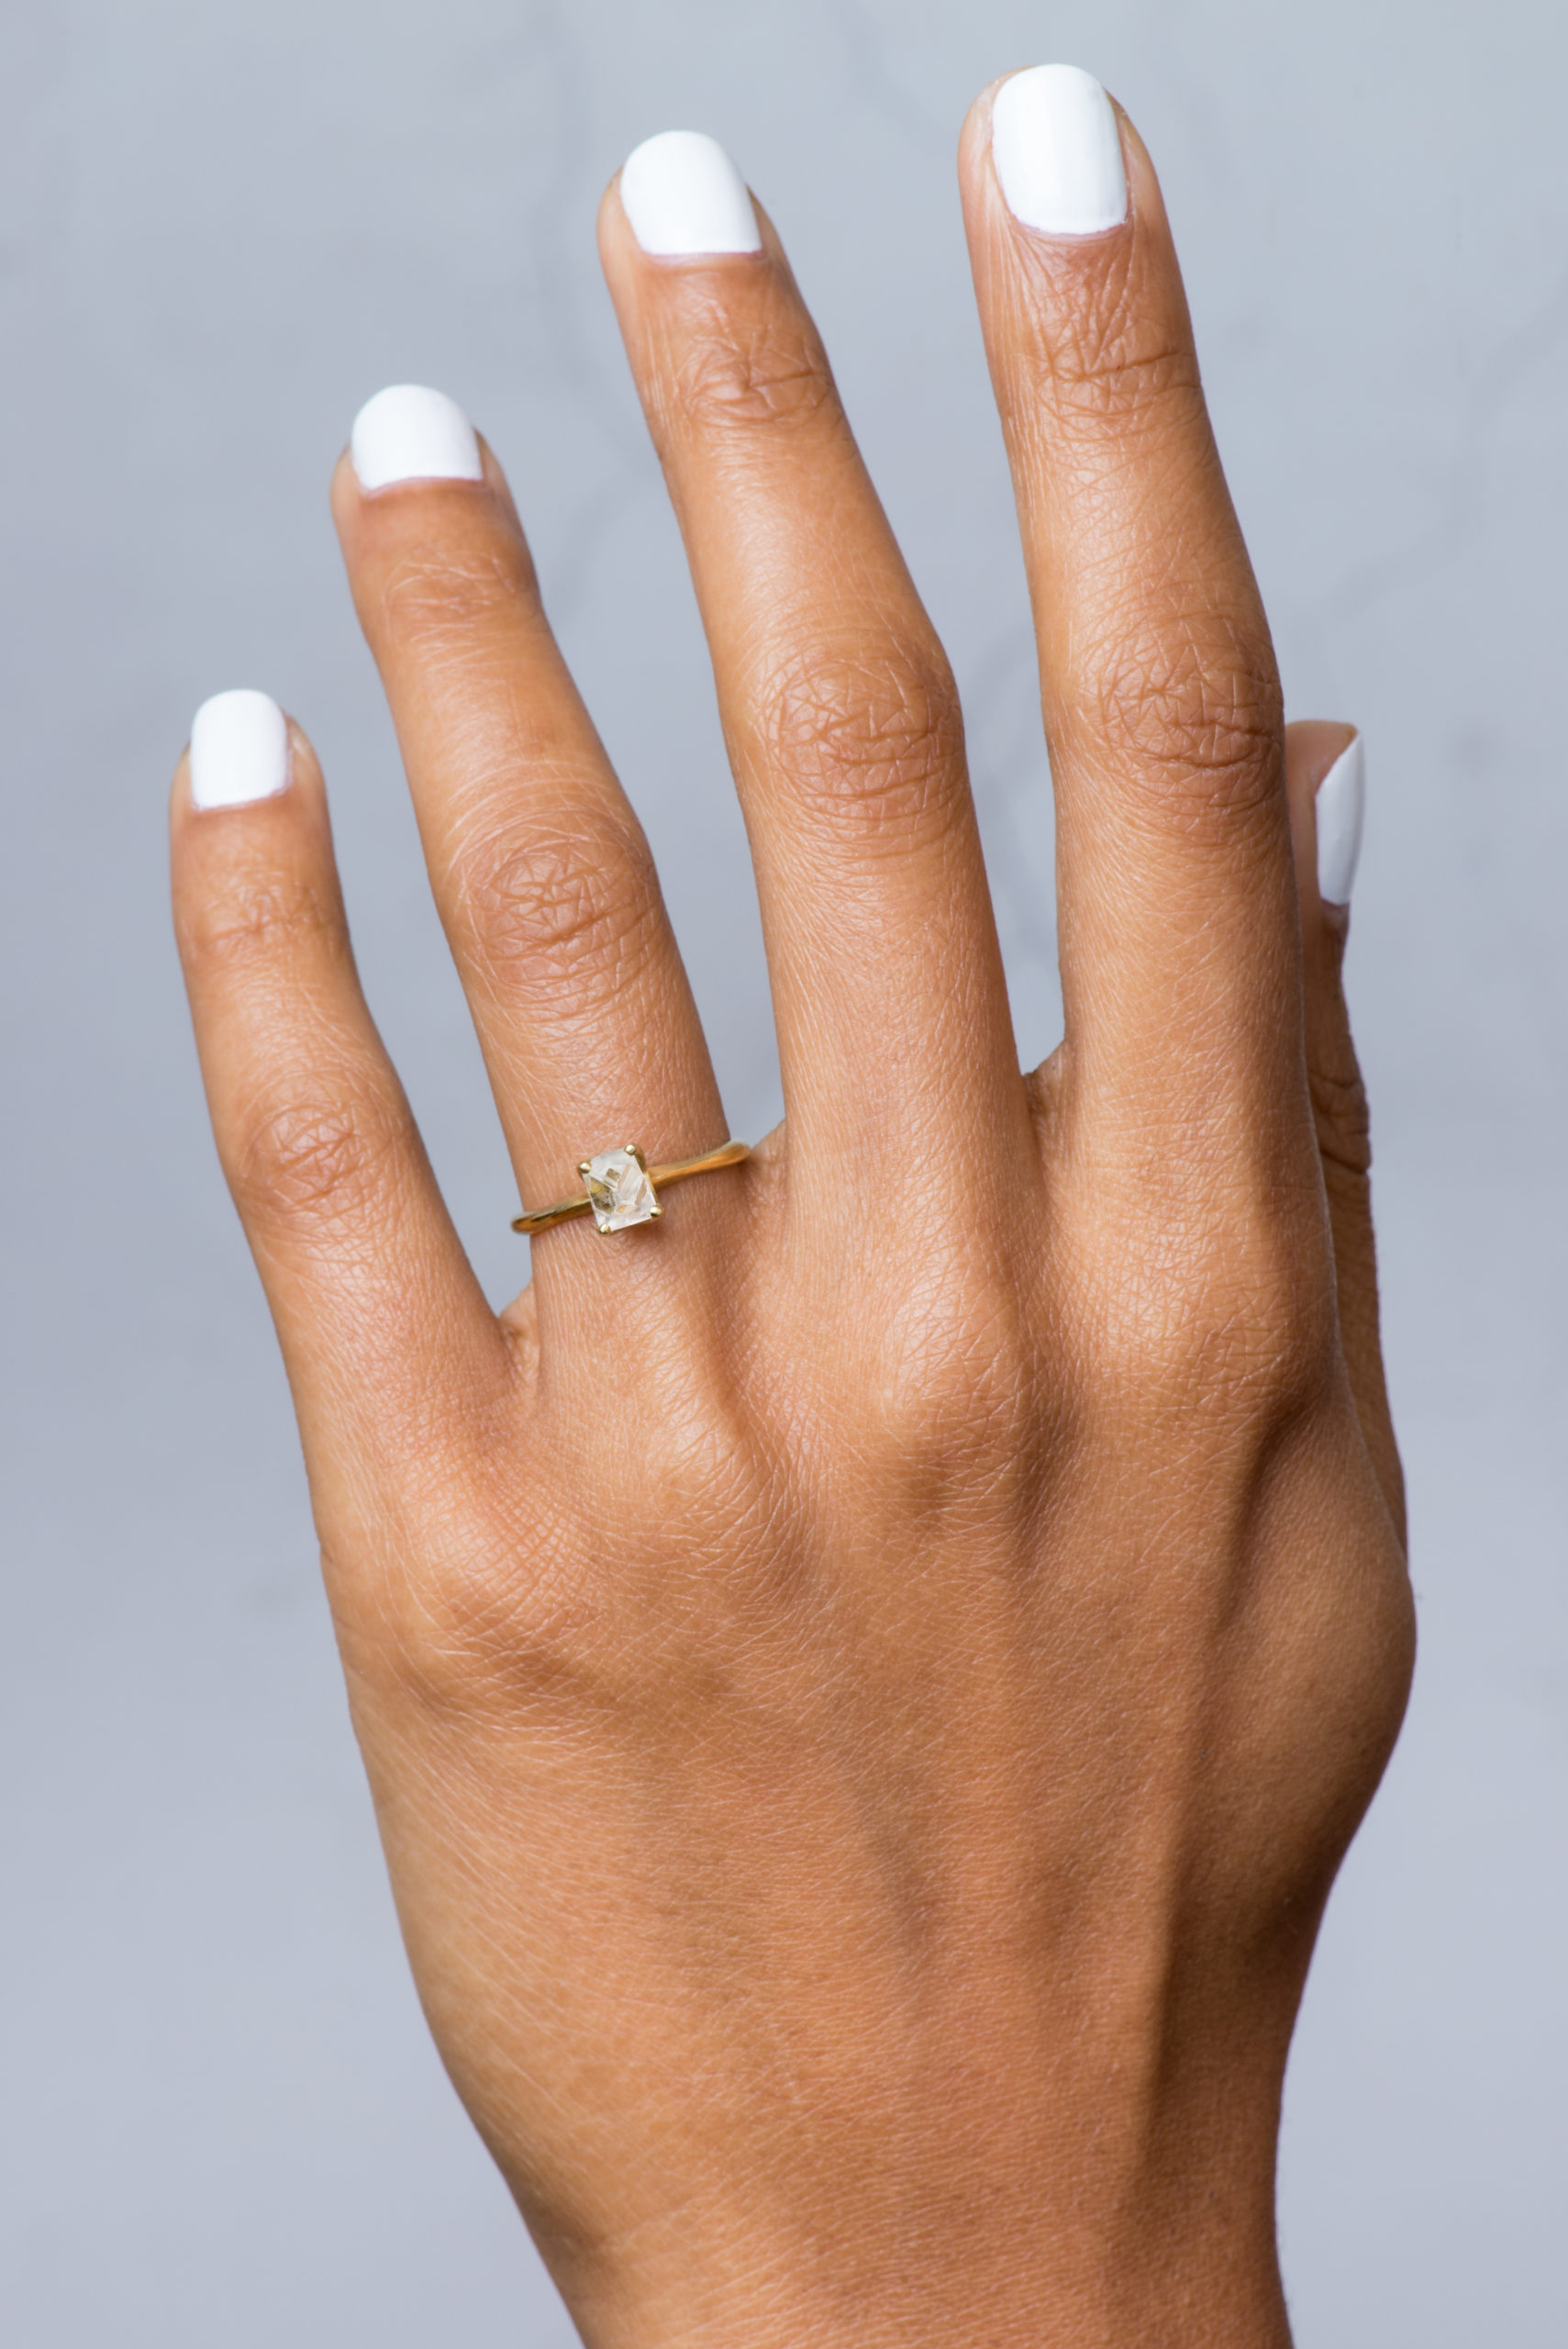 Ethical Engagement Rings: Diamonds, Moissanite, or Sapphire